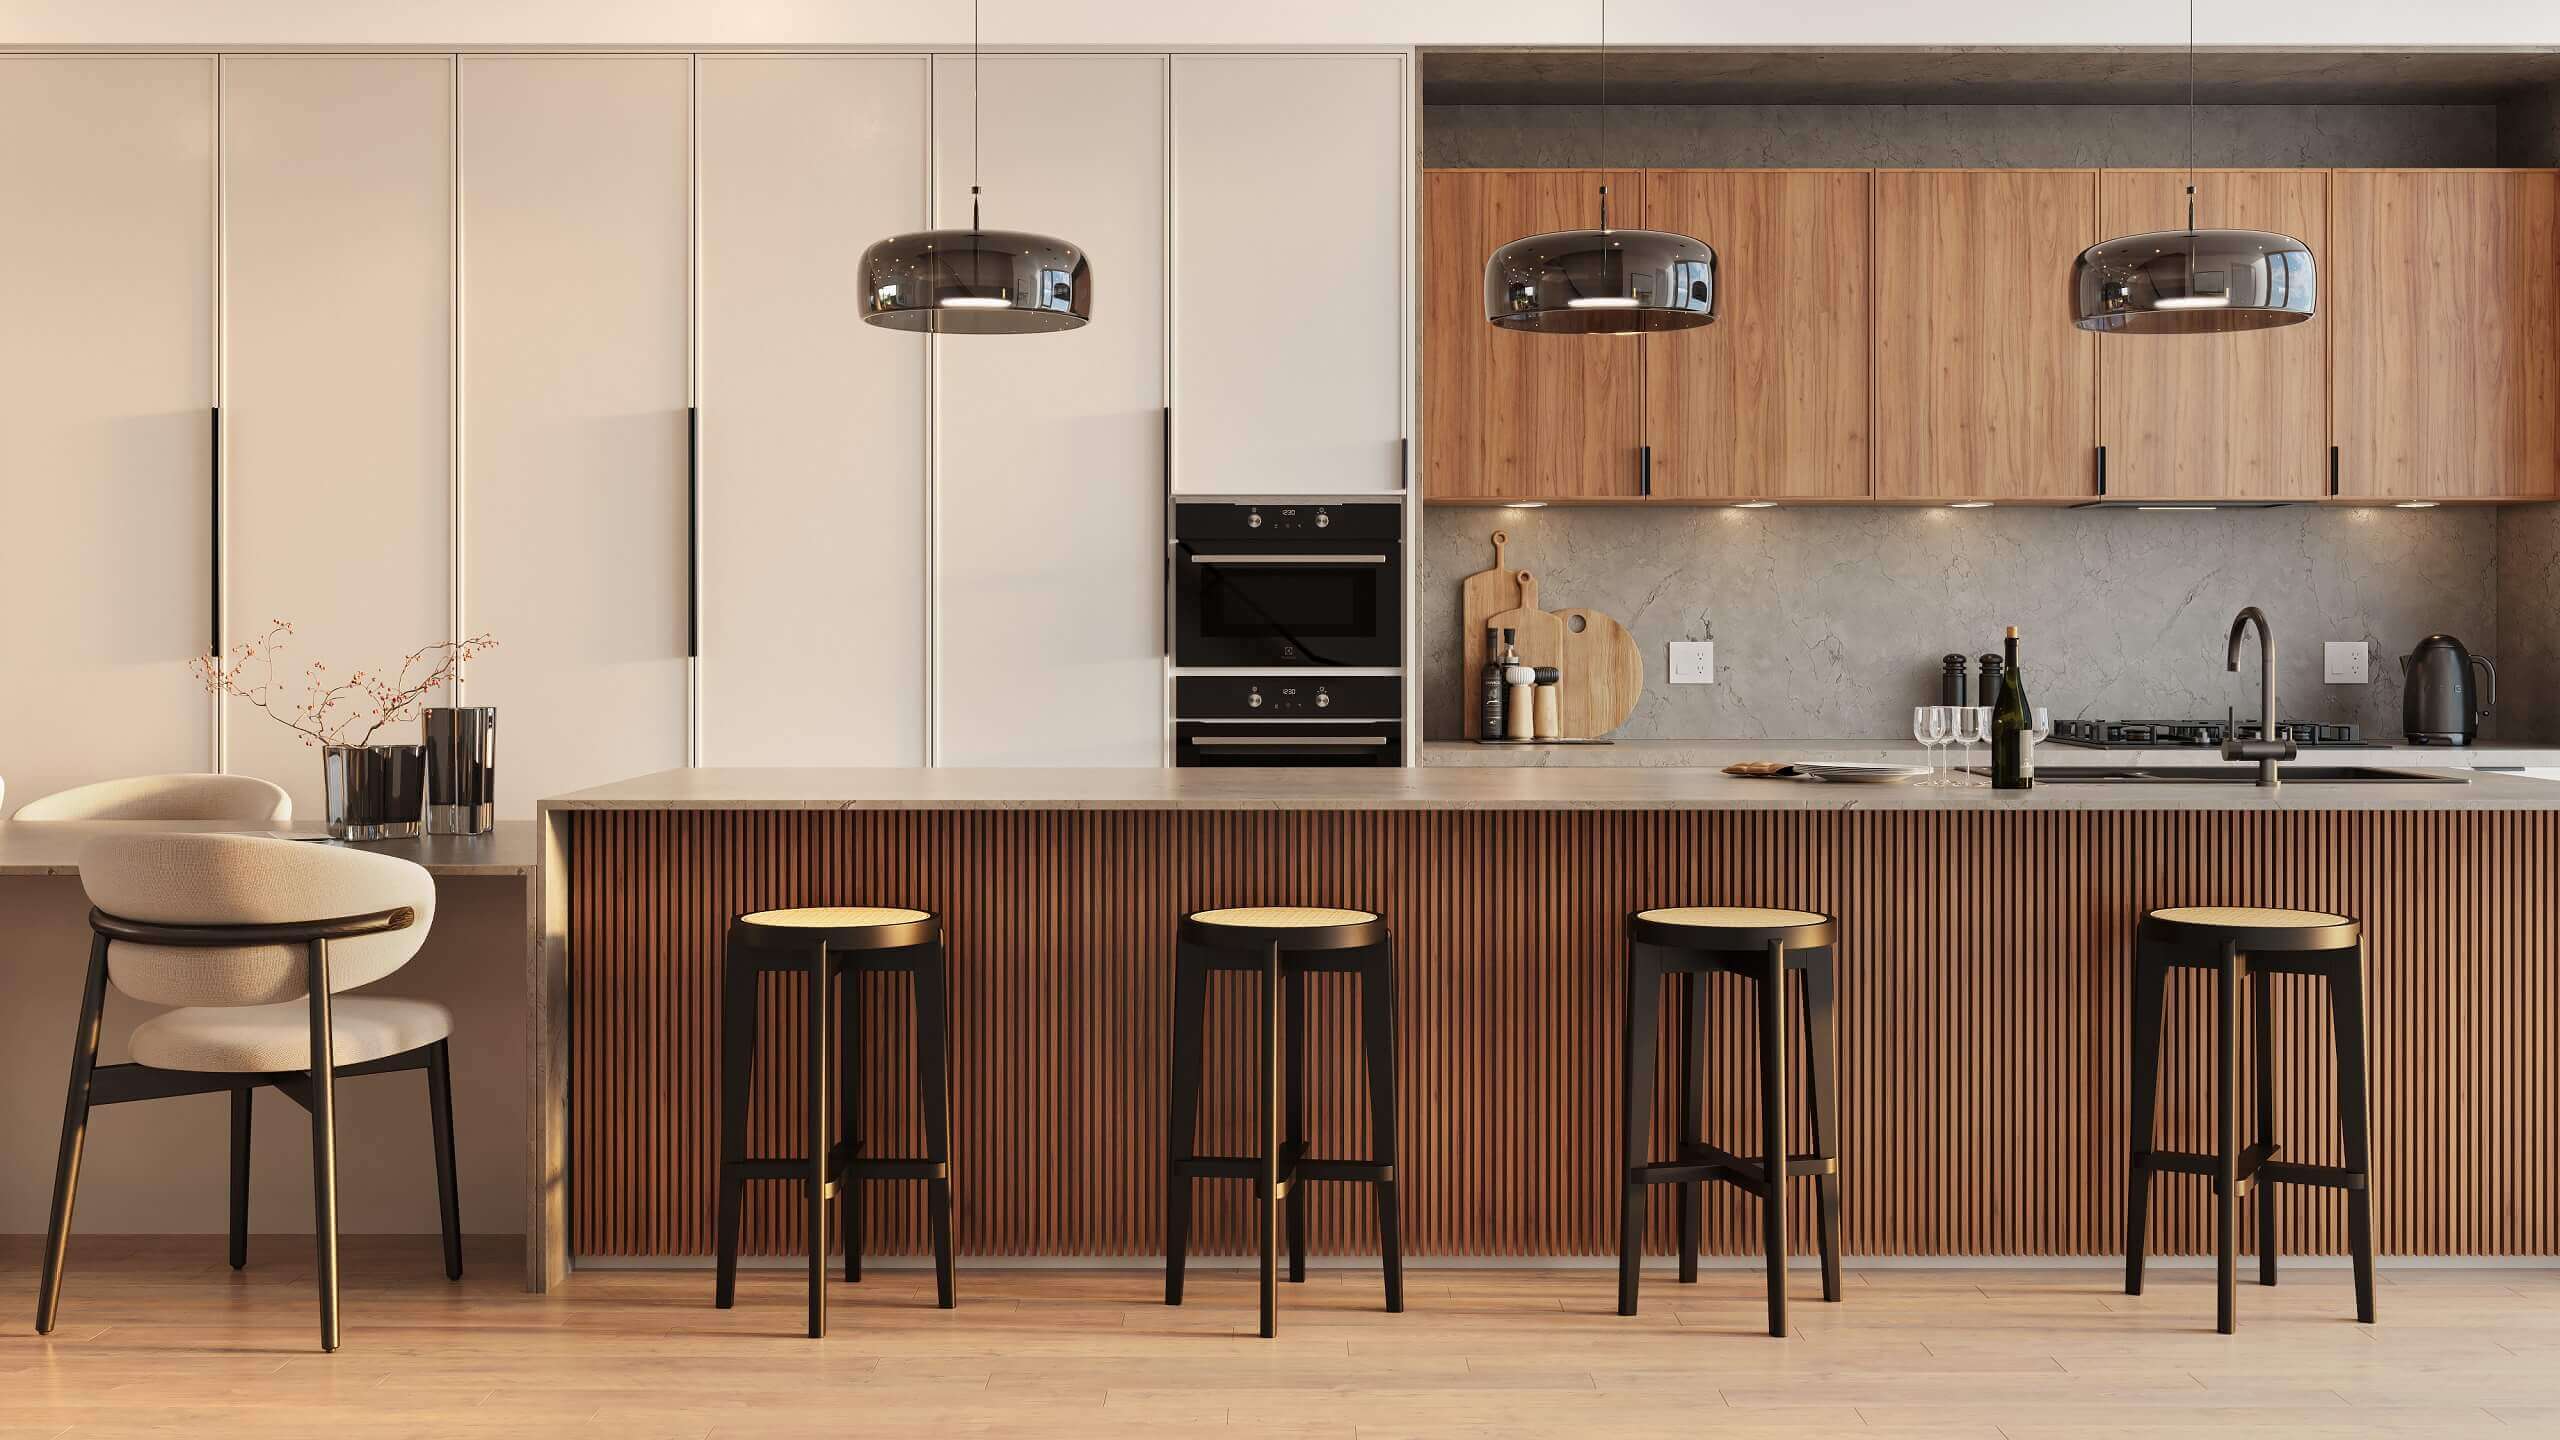 Kitchen 3D Rendering for Real Estate Listing